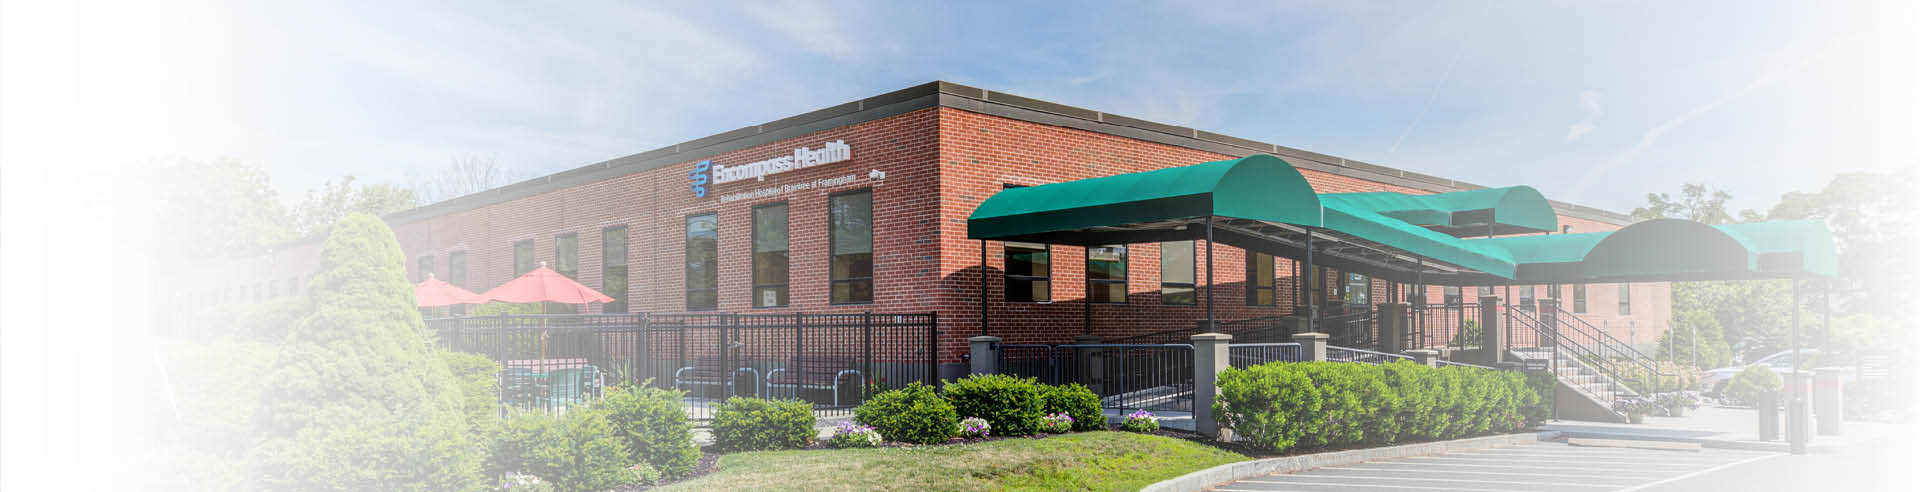 Exterior image of the Rehabilitation Hospital of Braintree at Framingham